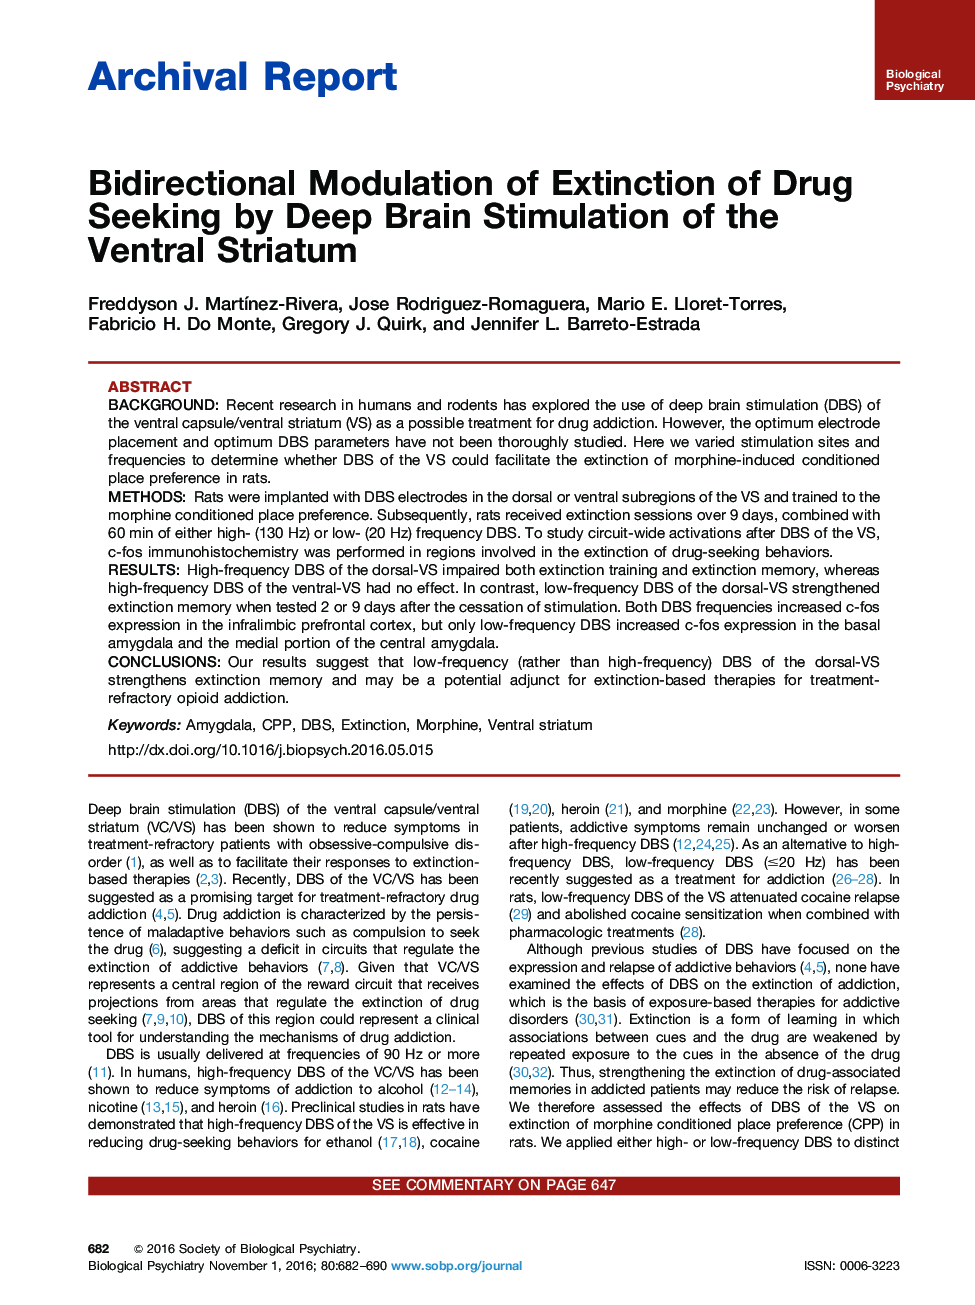 Bidirectional Modulation of Extinction of Drug Seeking by Deep Brain Stimulation of the Ventral Striatum